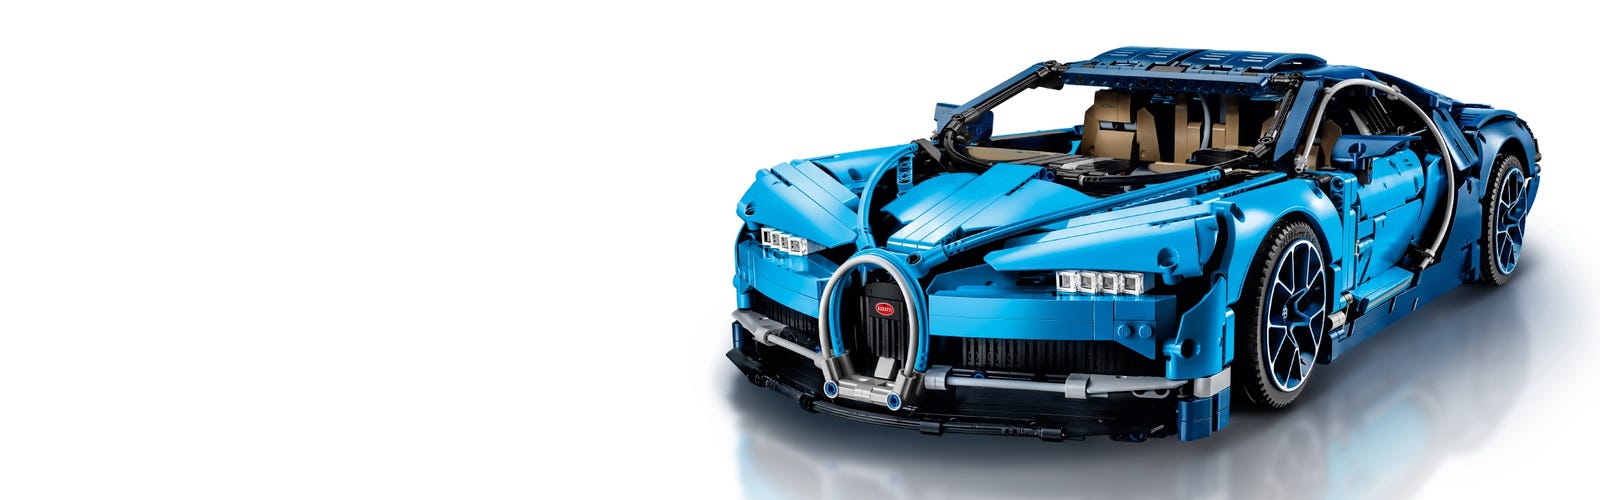 LEGO Technic Bugatti Chiron 42083 Race Car Building Kit